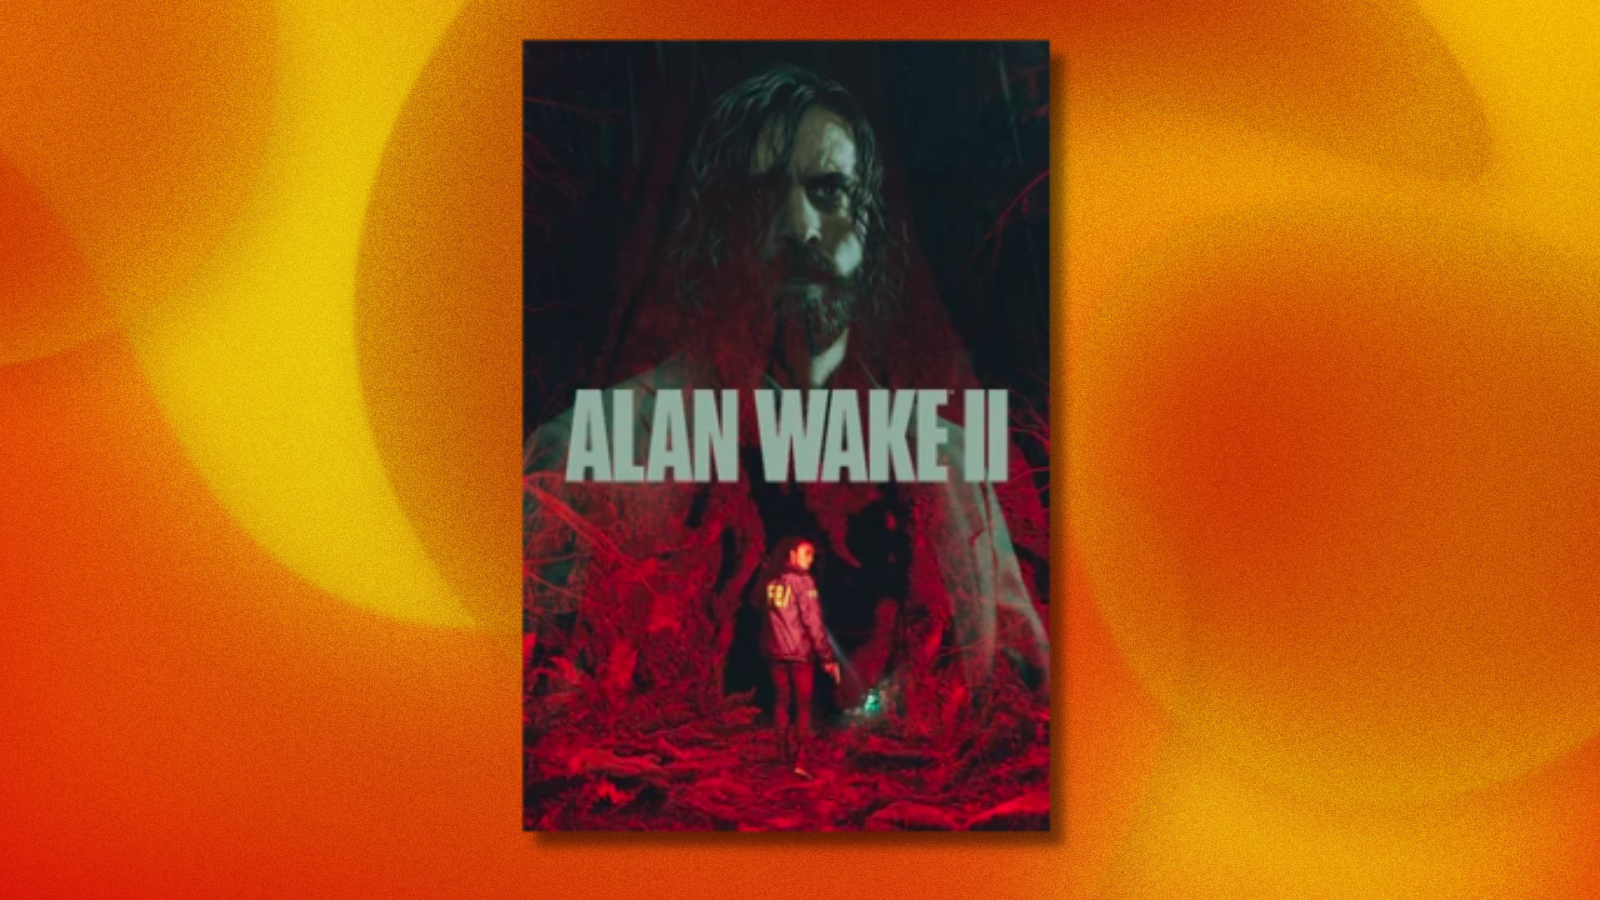 'Alan Wake II' box art on orange abstract background